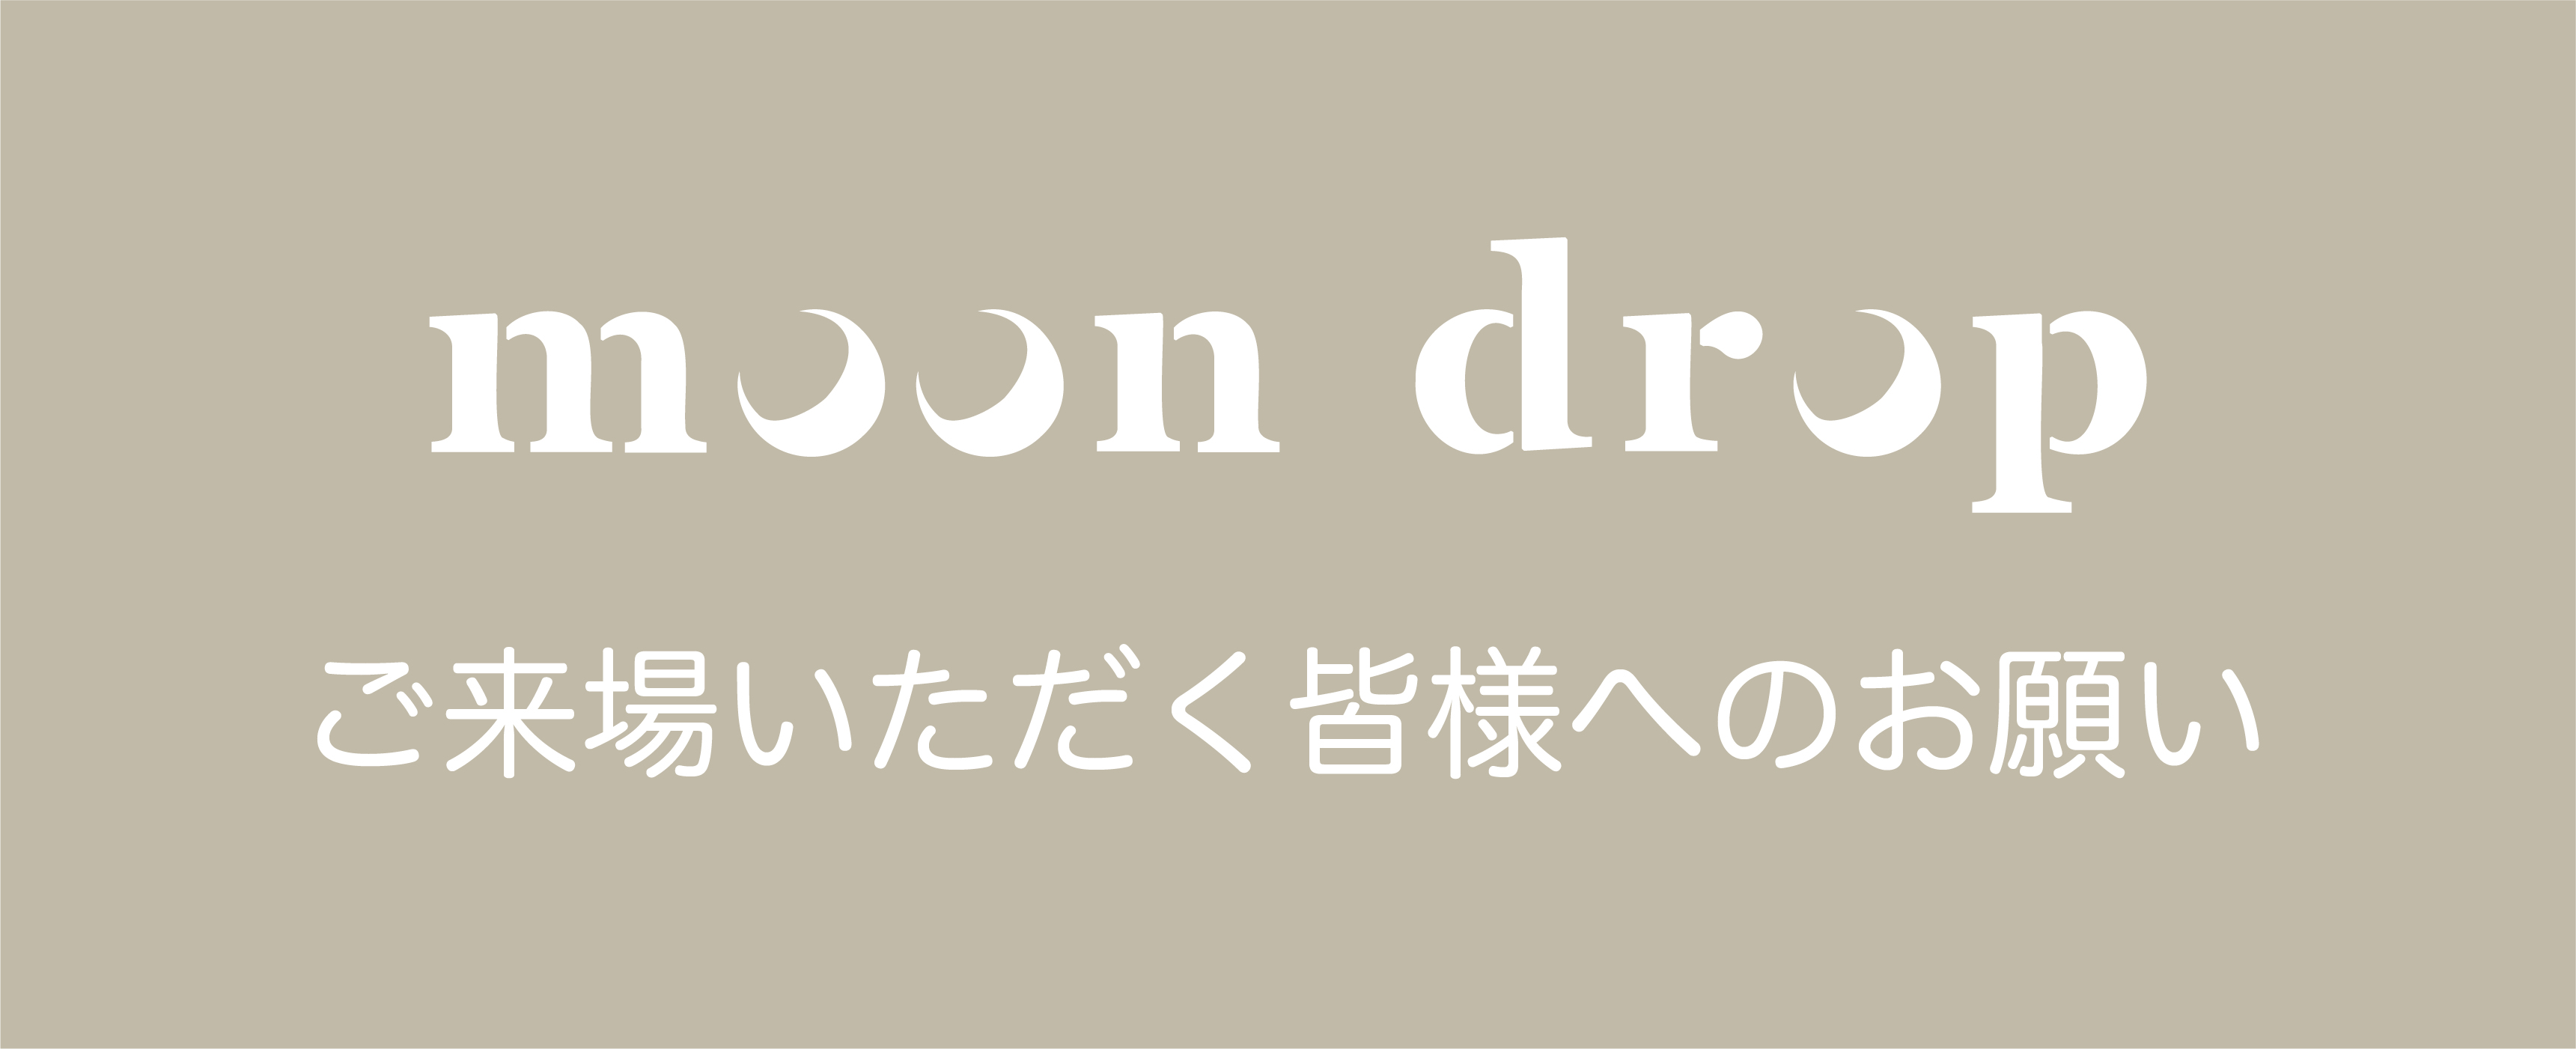 moon drop_live_announce